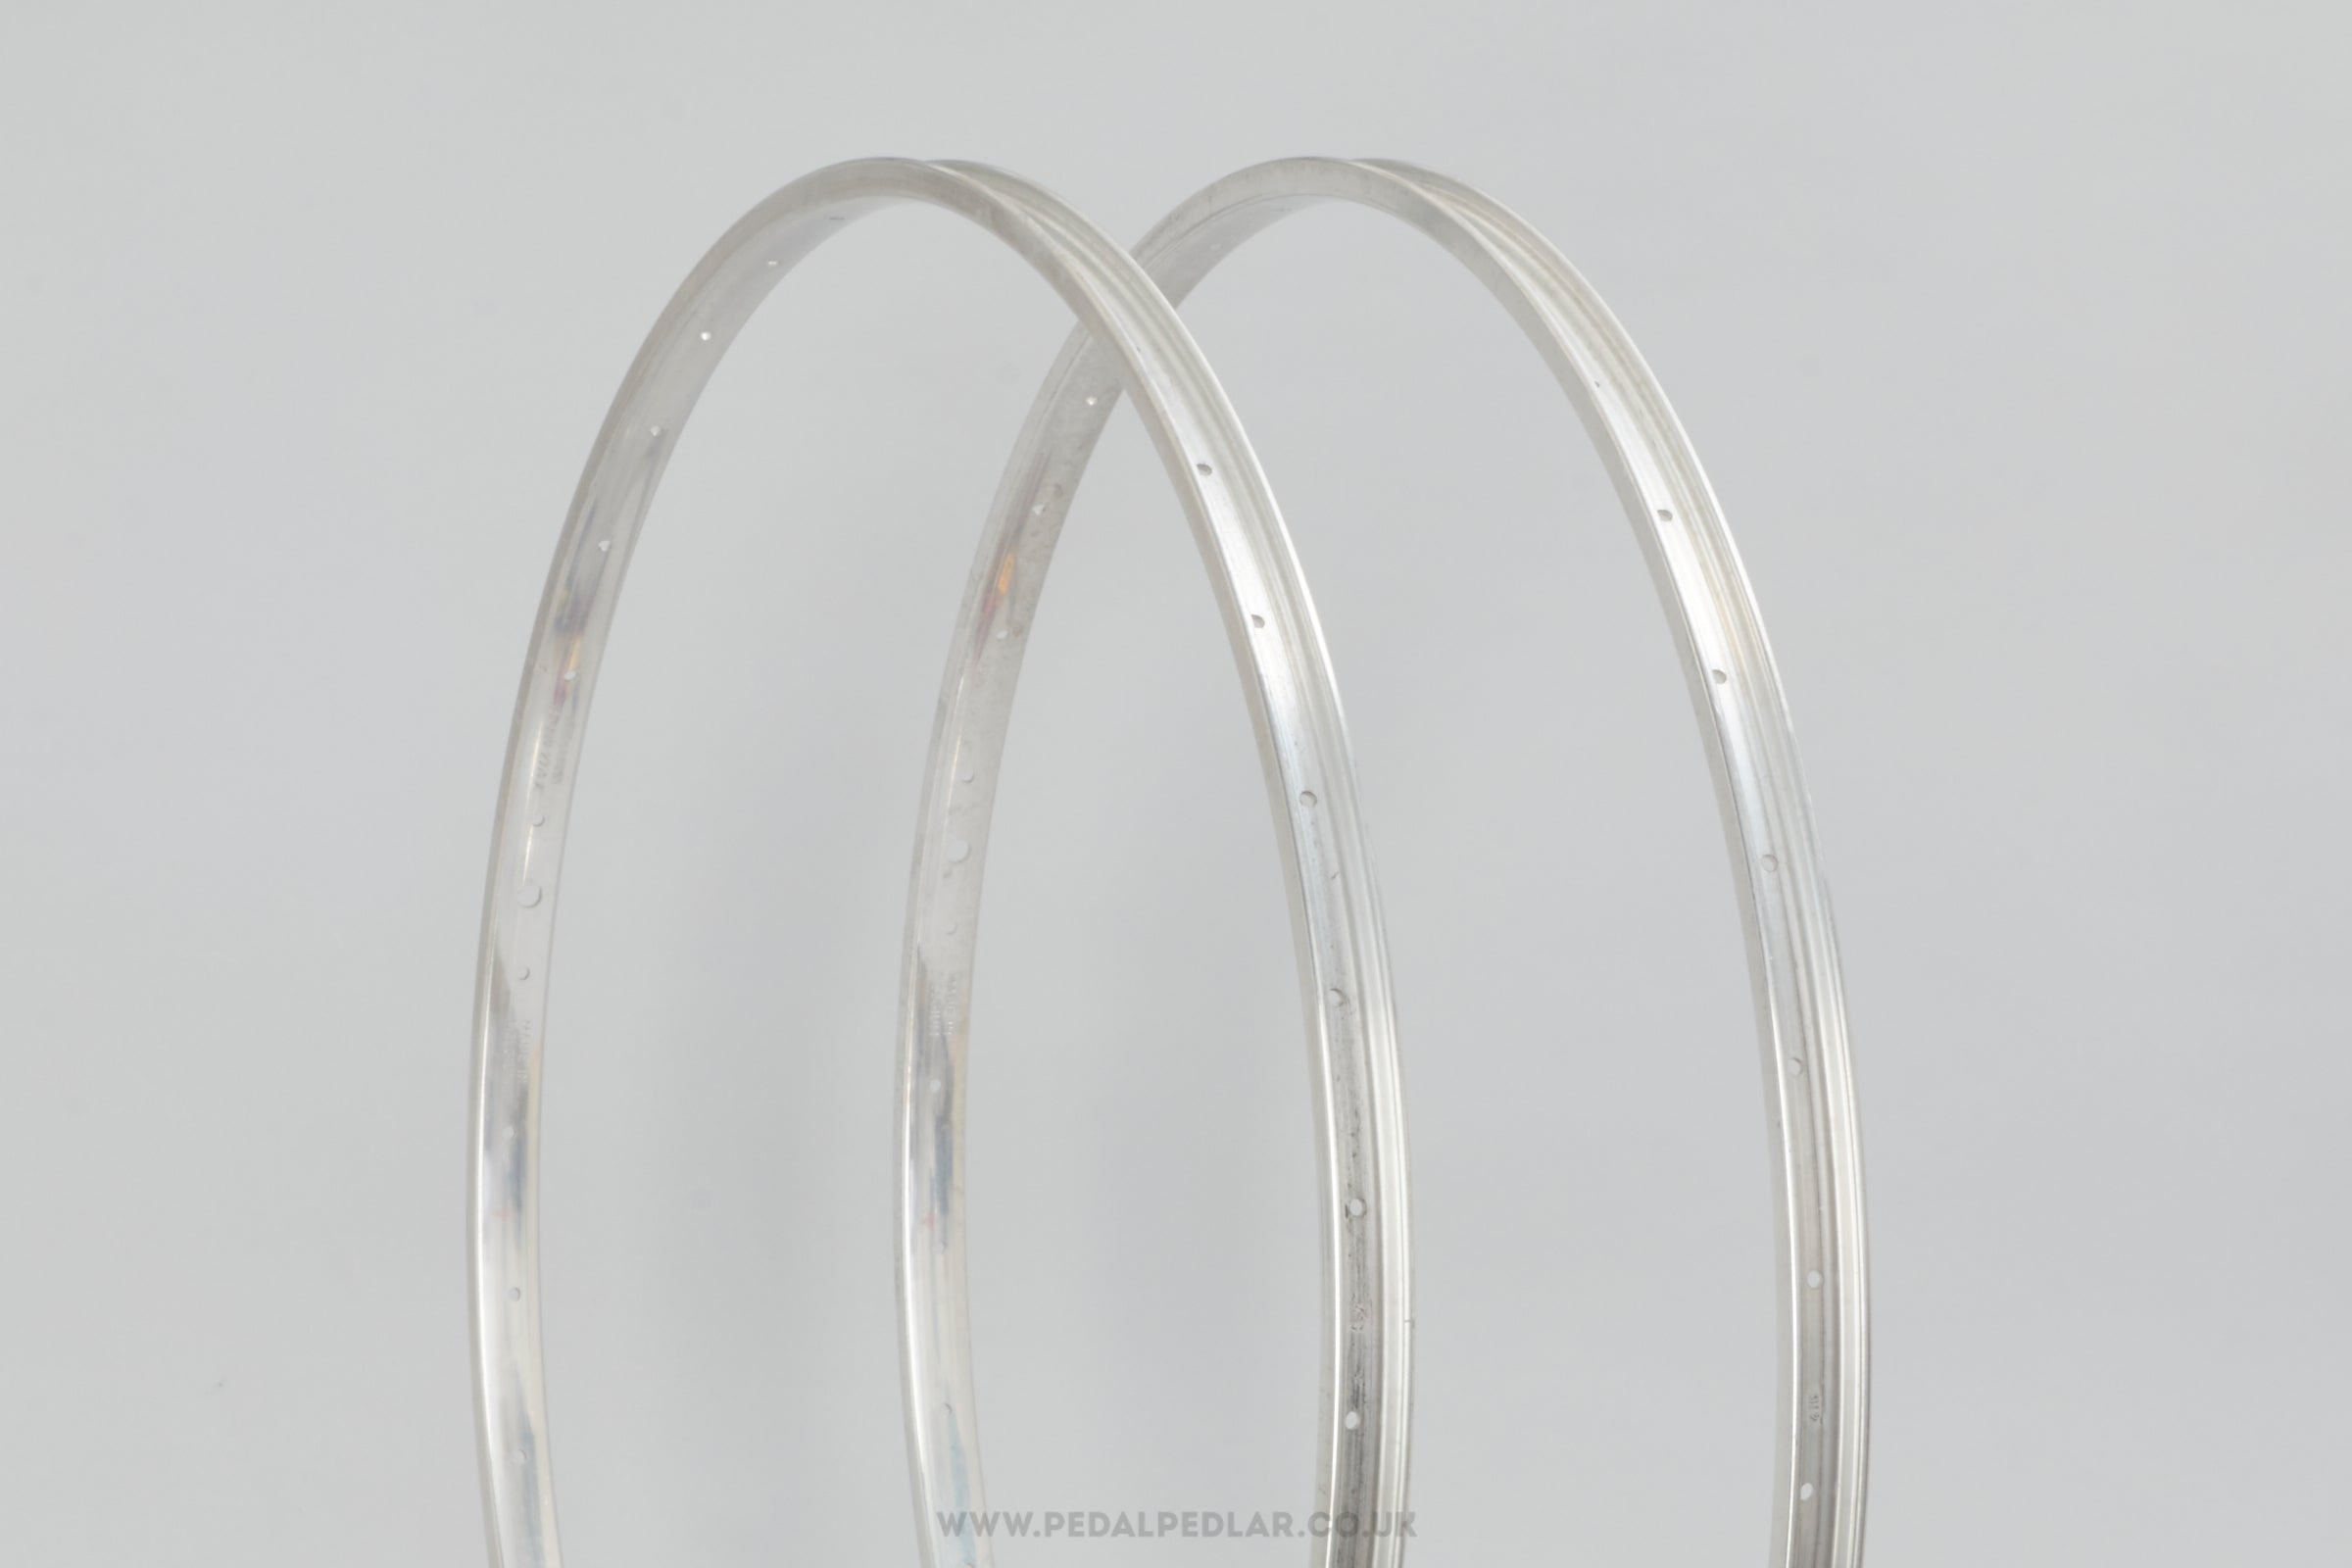 Weinmann Polished Silver NOS Vintage 36h 27" Clincher Rims - Pedal Pedlar - Buy New Old Stock Bike Parts